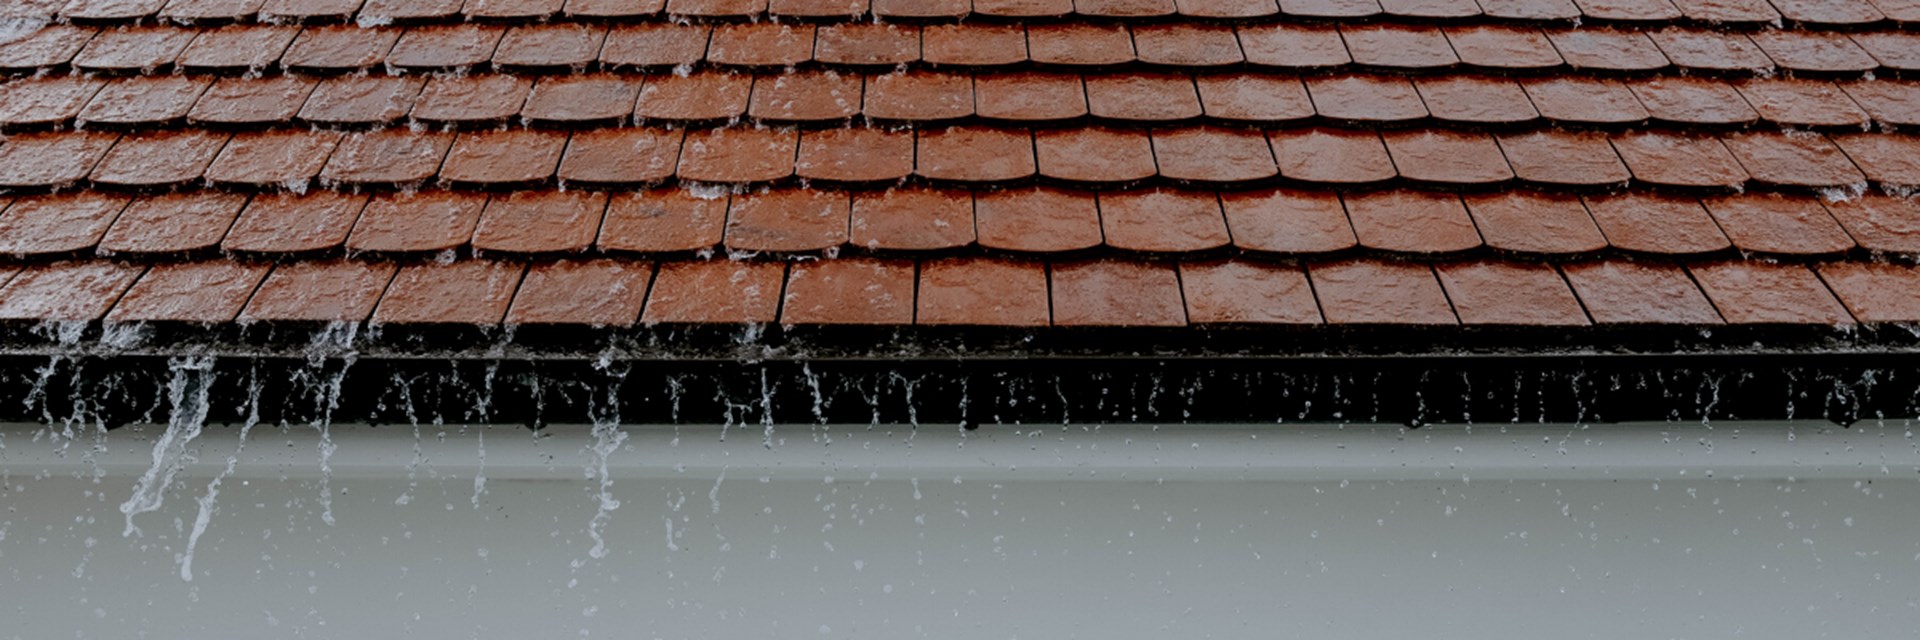 Roof Leak Insurance